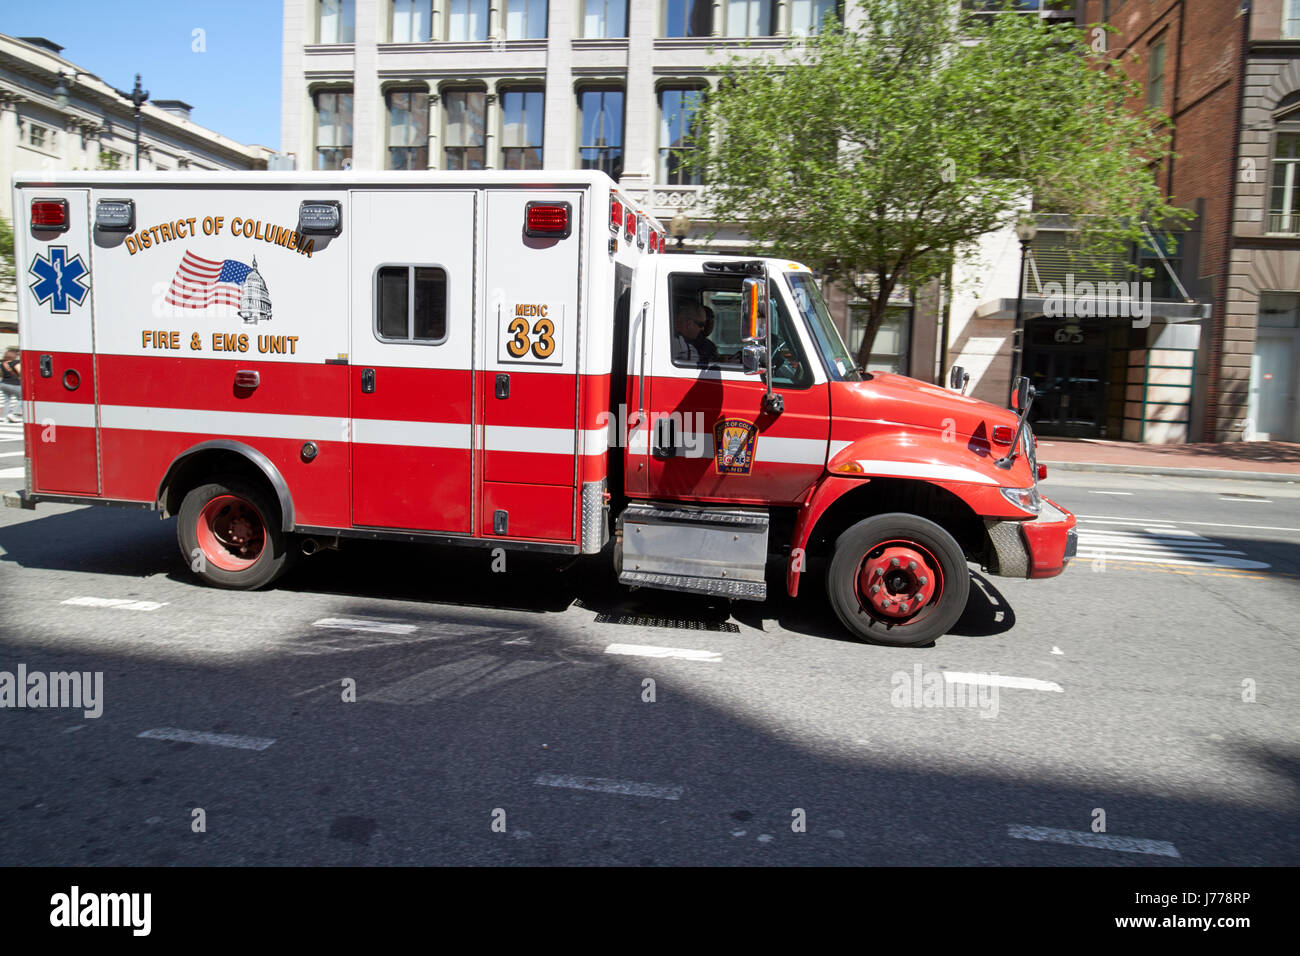 District Of Columbia Feuer und Ems Gerät Medic auf Abruf Washington DC USA Stockfoto